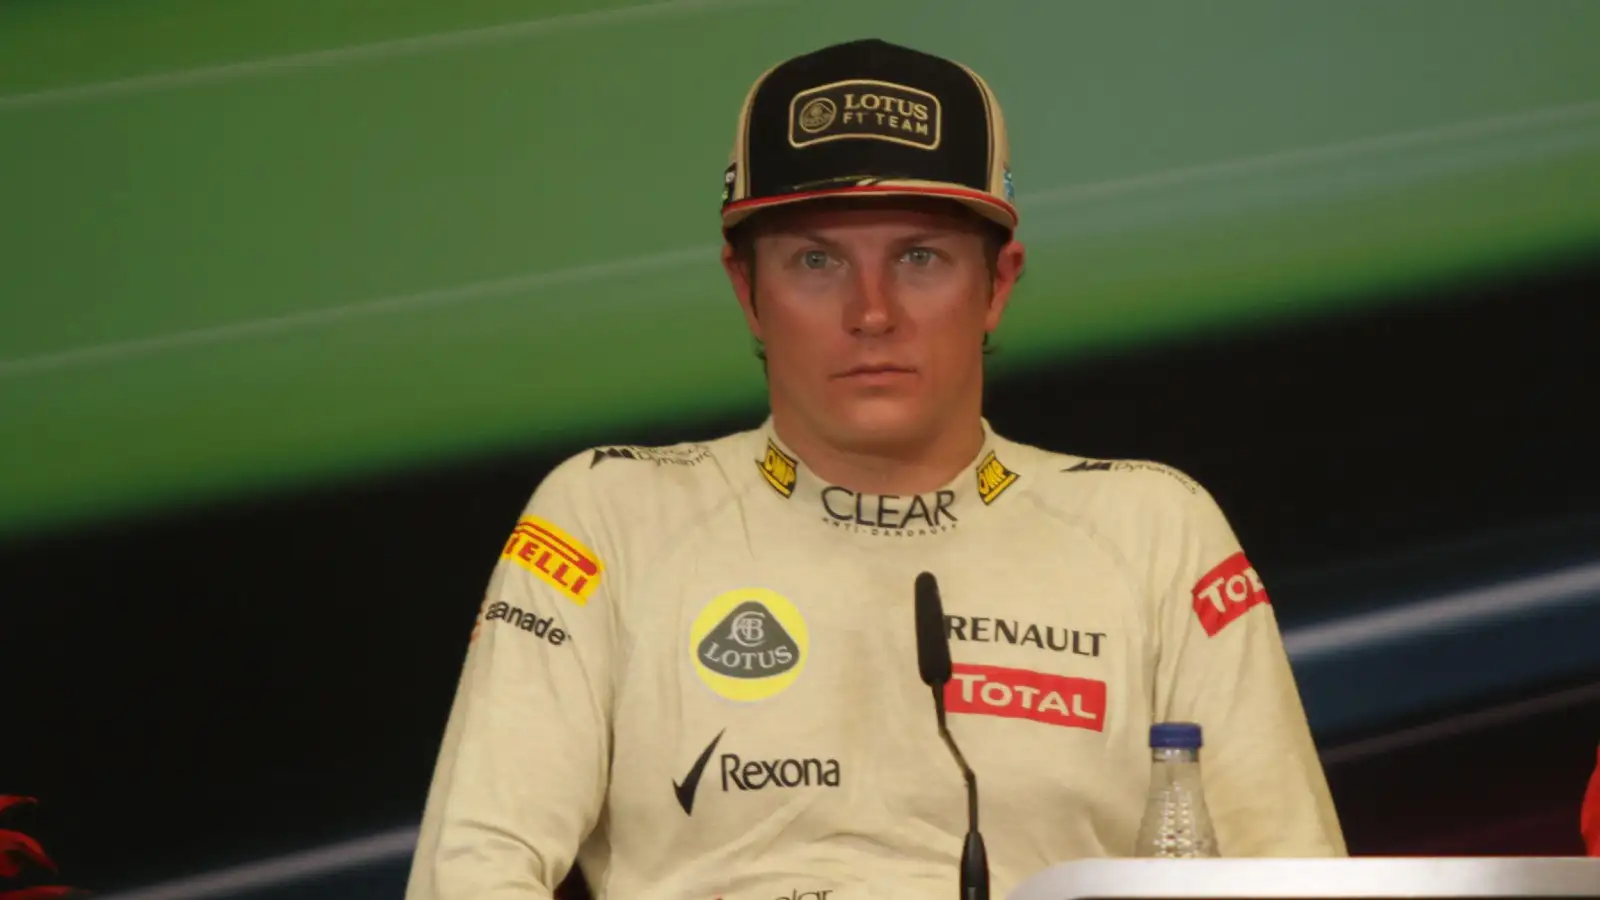 Kimi Raikkonen speaks to media in a press conference as a Lotus driver.